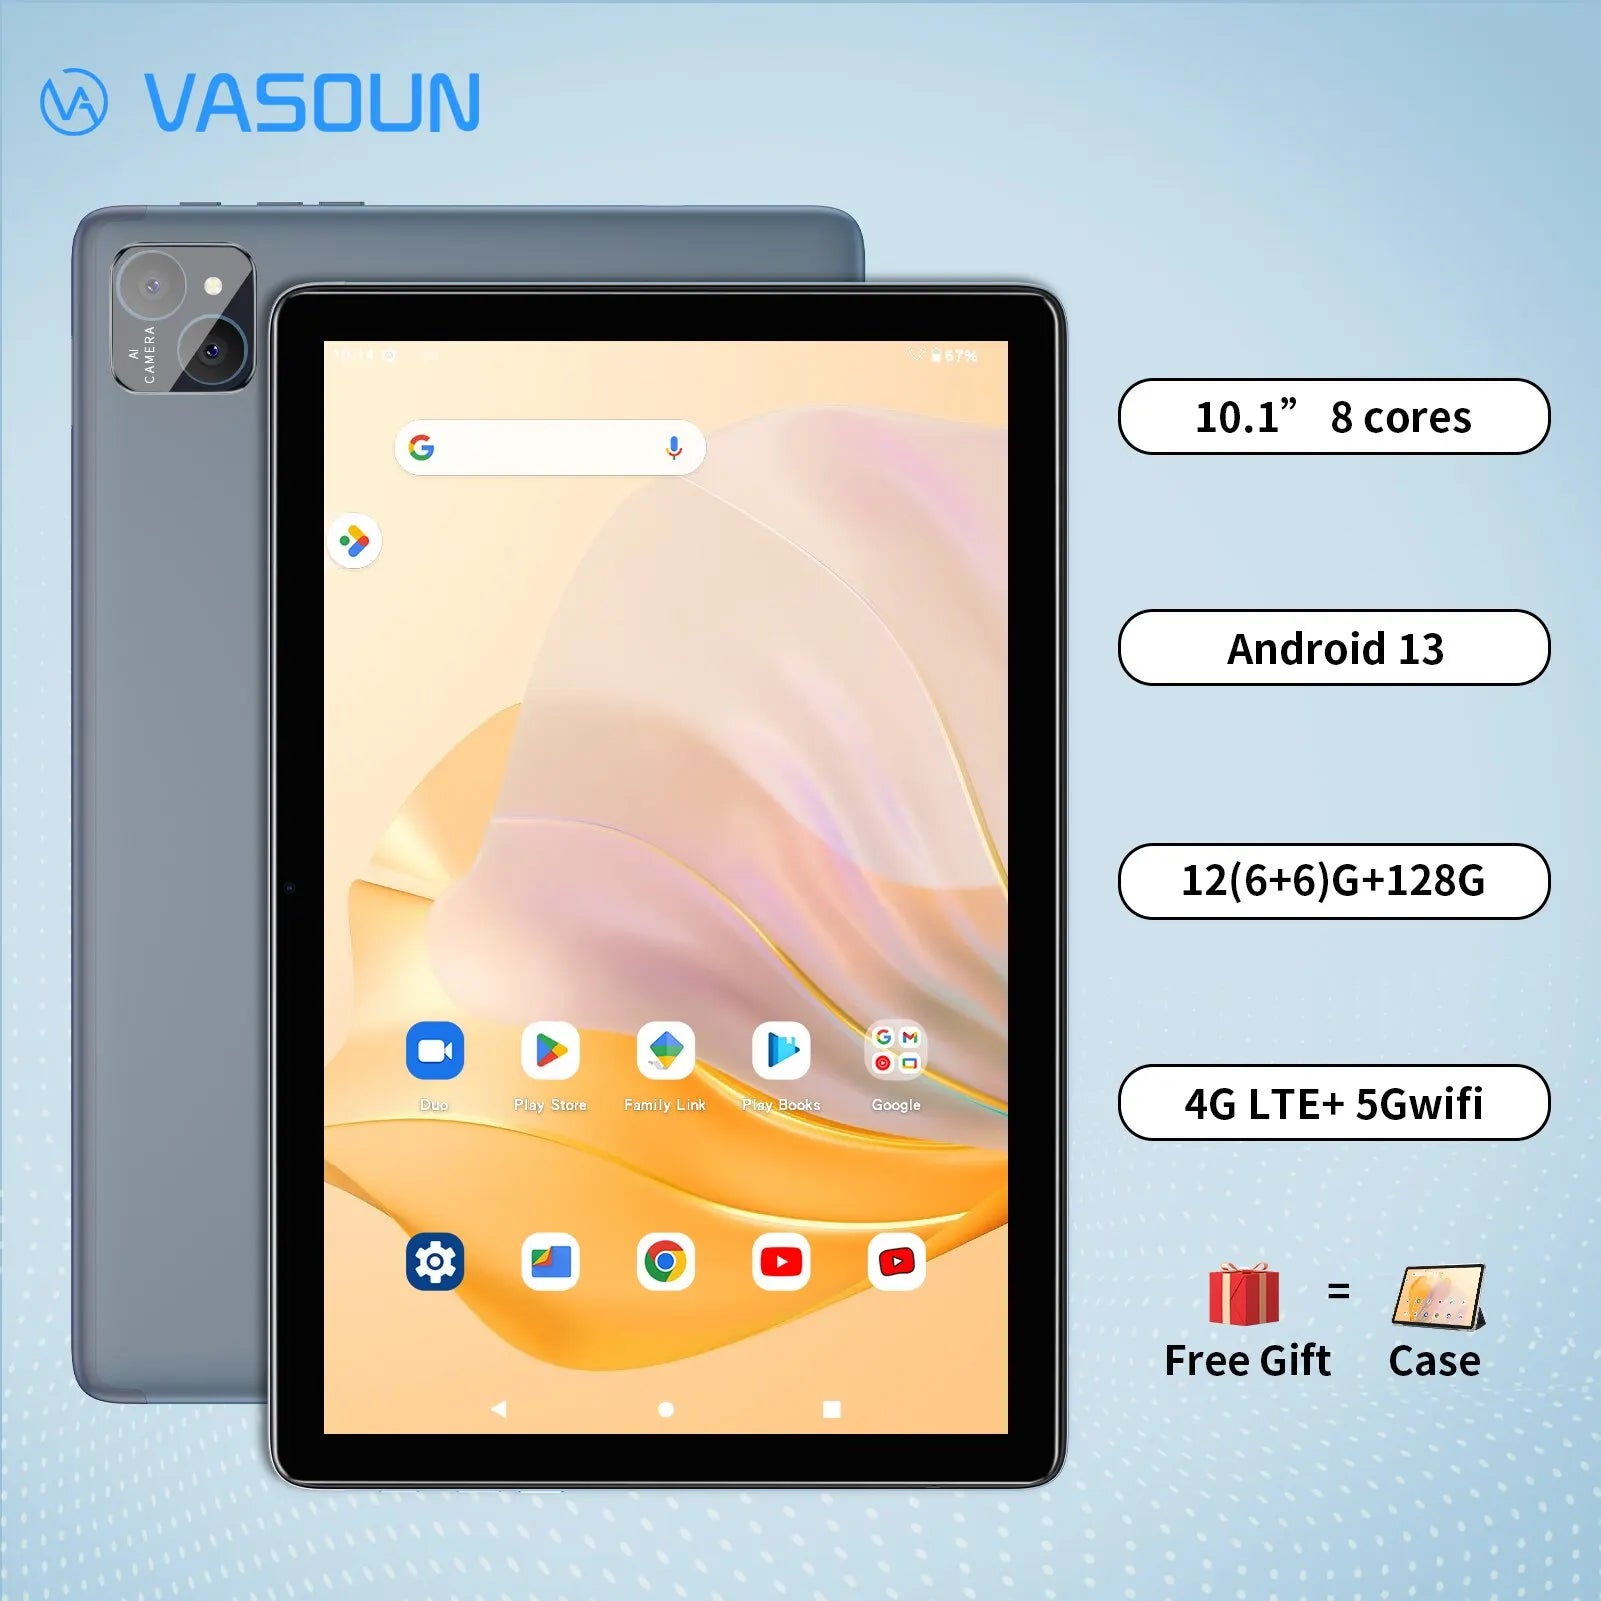 VASOUN Android 13 Tablet: High-Performance Octa Core Device for Seamless Multitasking  computerlum.com   